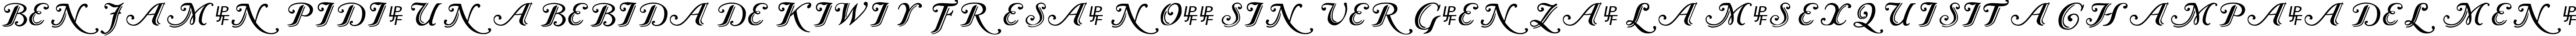 Пример написания шрифтом Caslon Calligraphic Initials текста на испанском